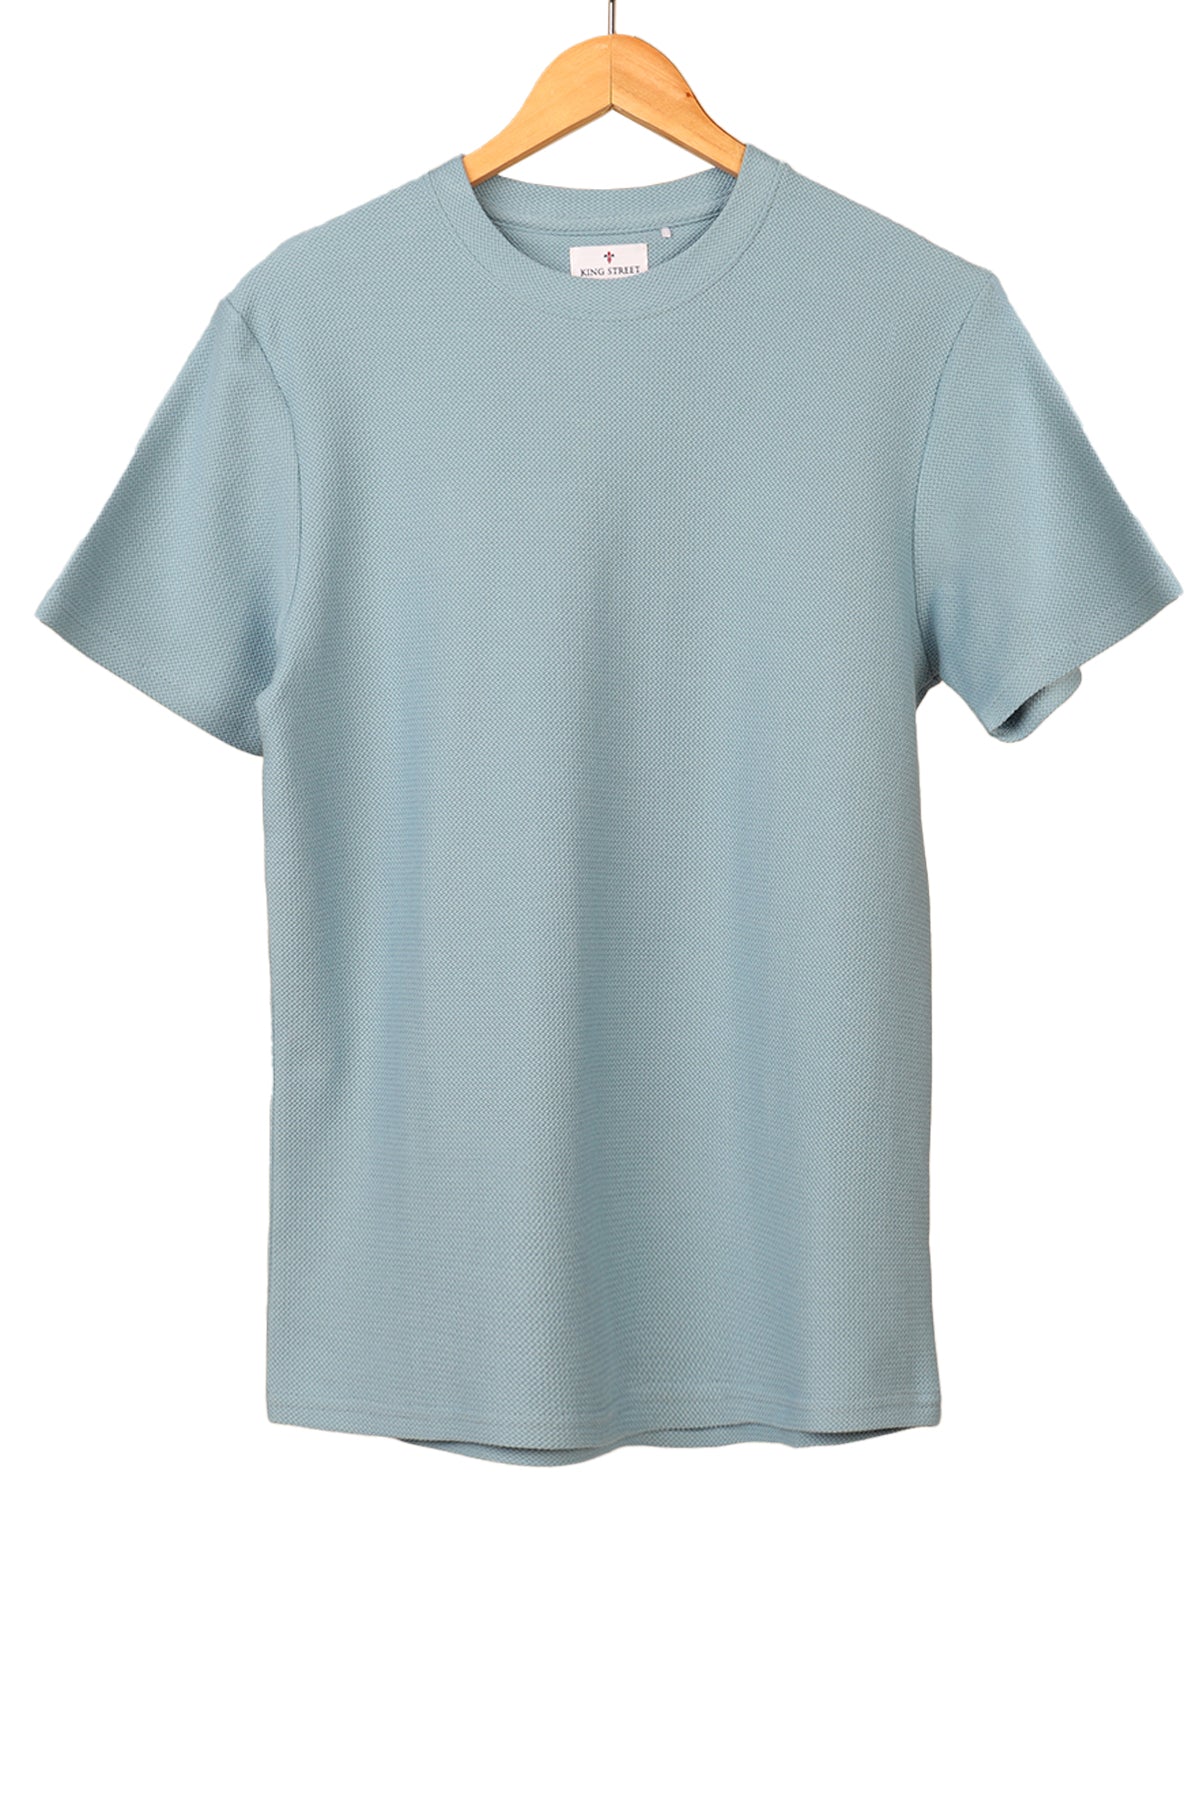 King Street Short Sleeve Plain Casual T-Shirt